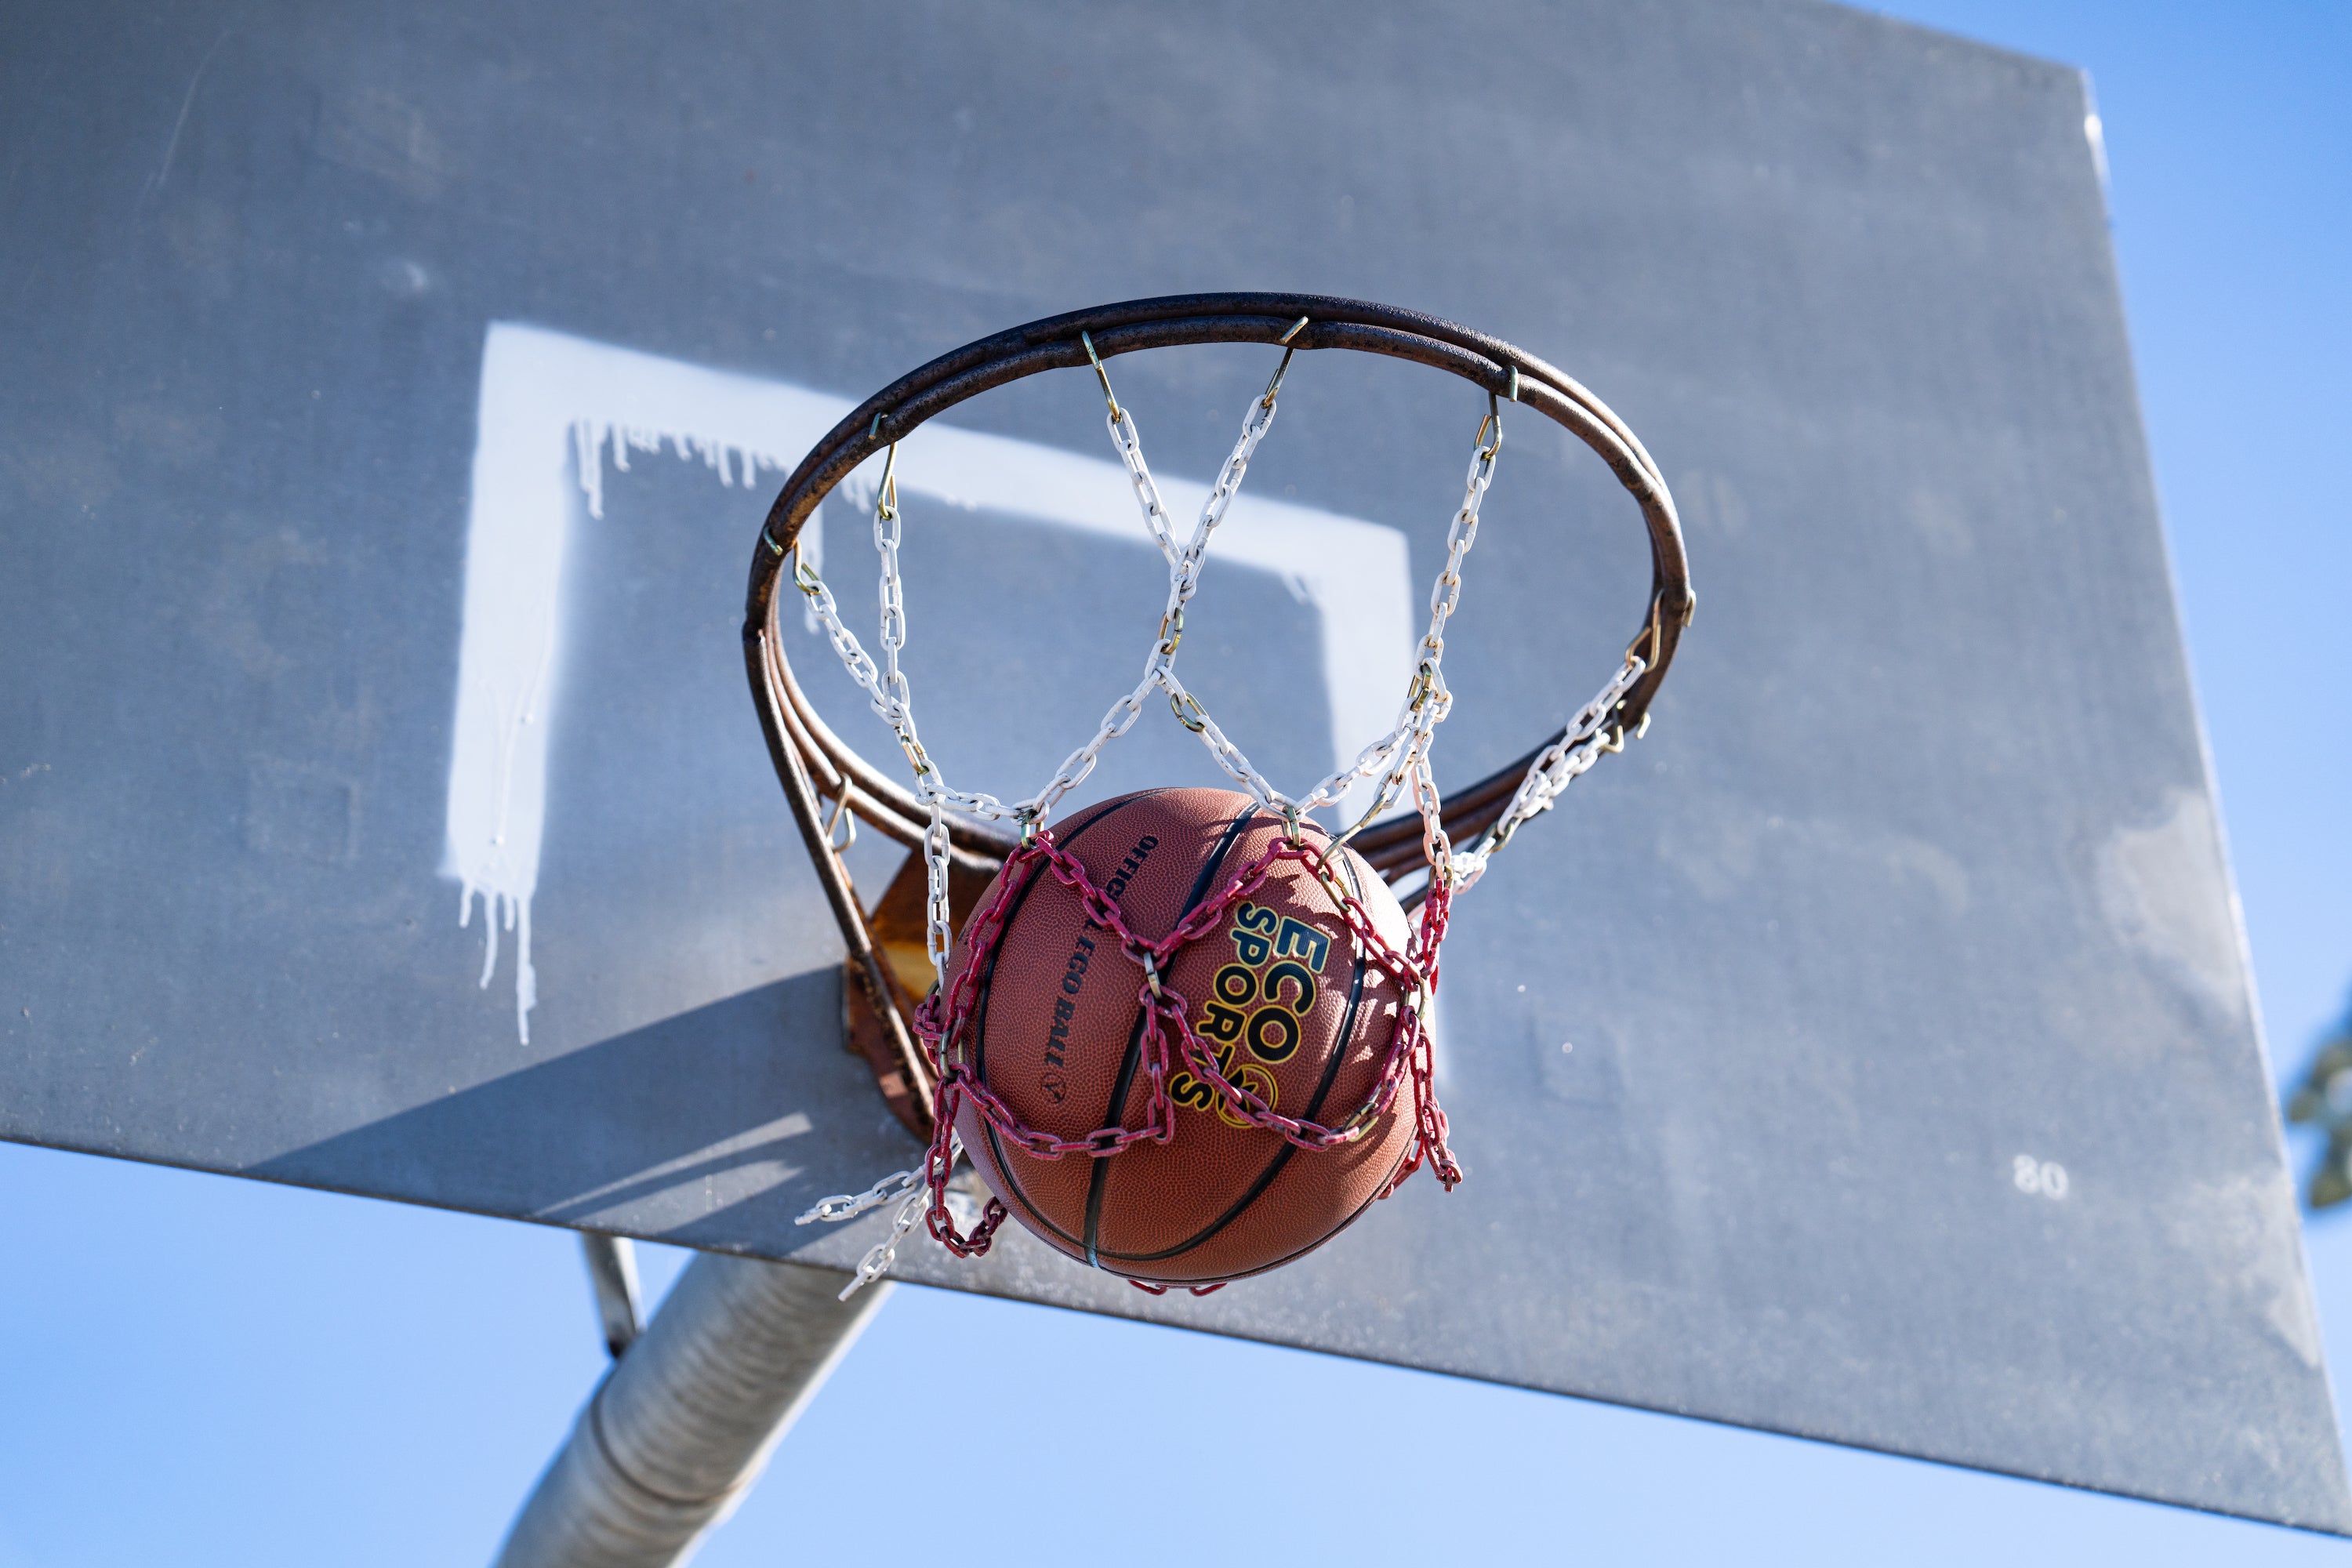 Bulk Basketball Balls For Camps, Coaches, & Training - Mens, Womens, & Kids  Basketballs Deflated